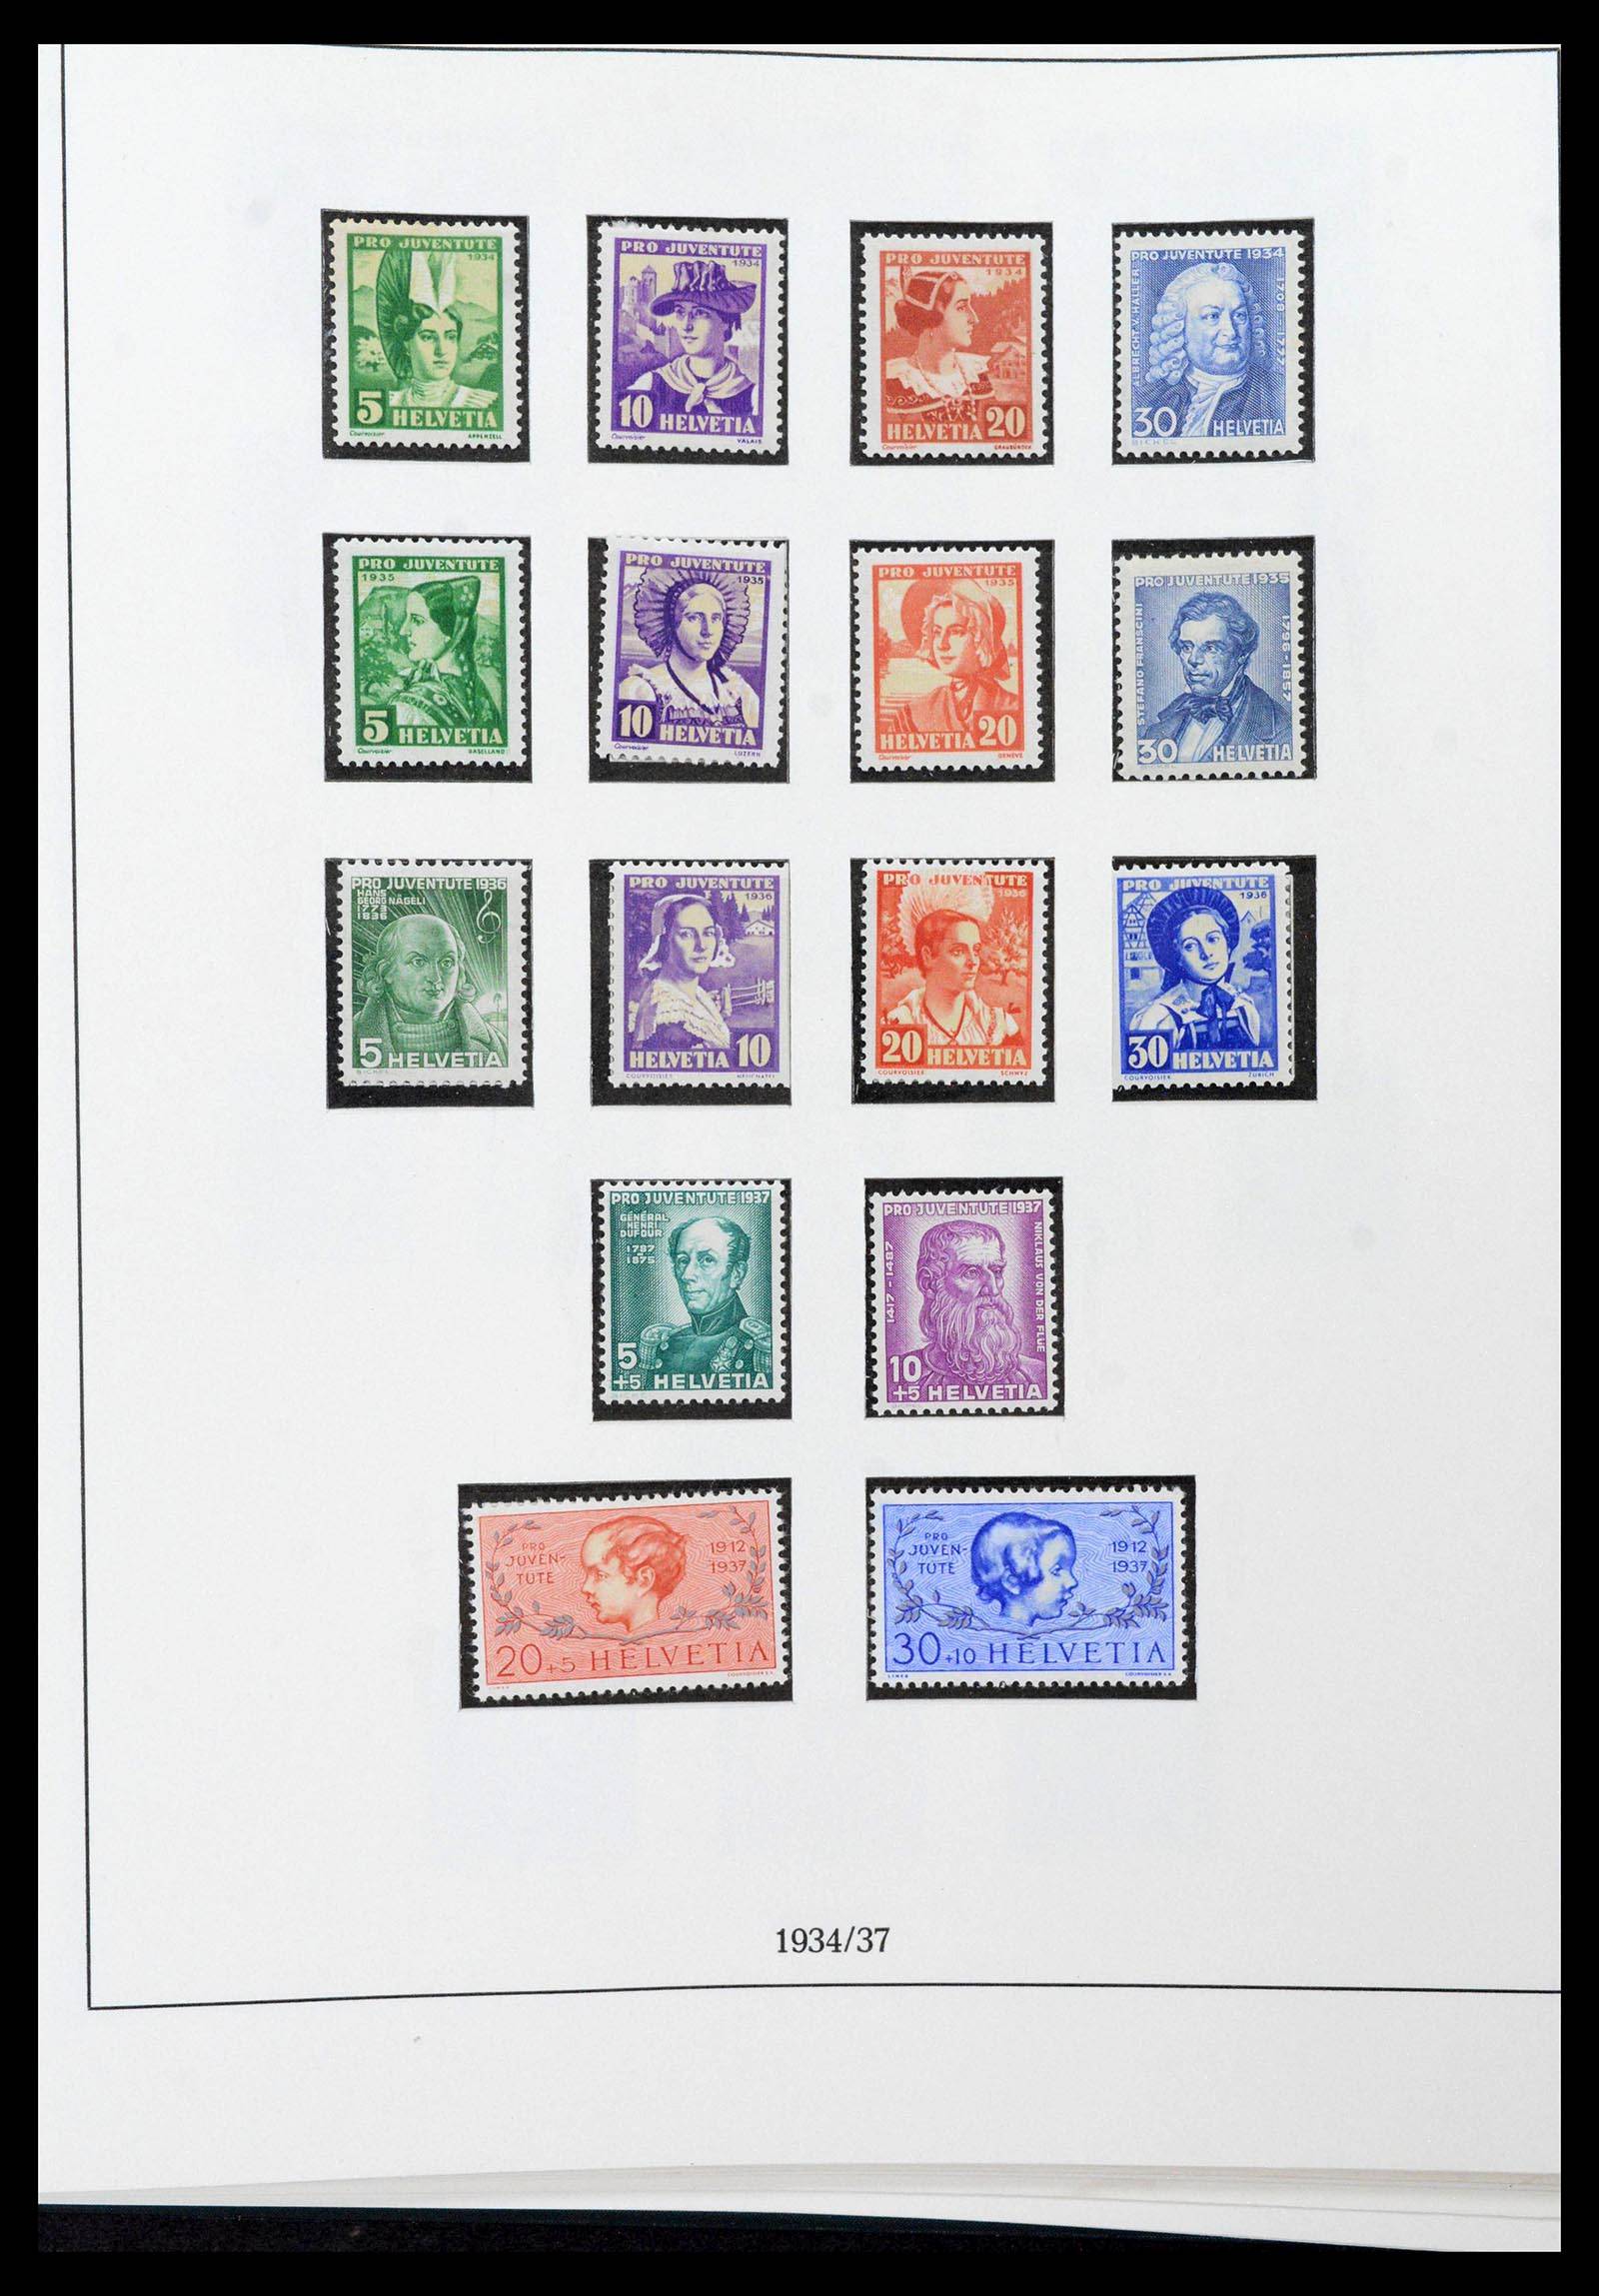 39235 0022 - Stamp collection 39235 Switzerland 1843-1960.